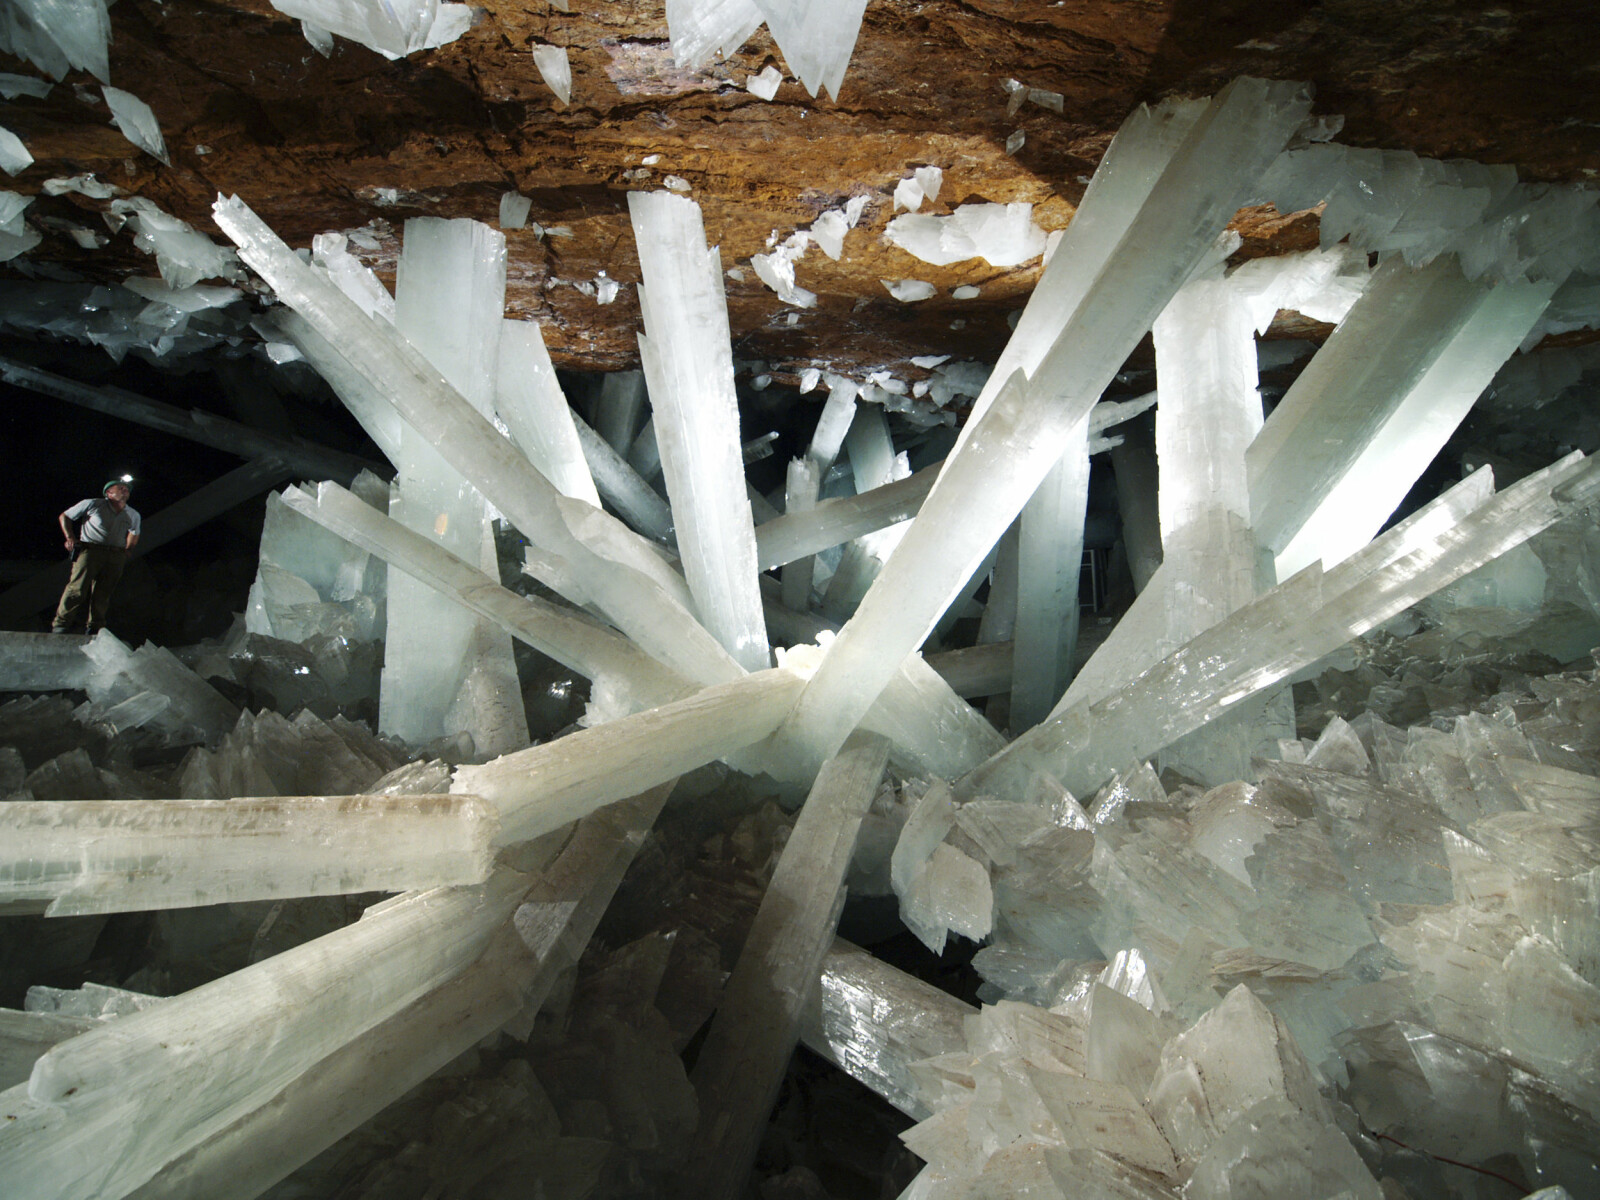 <b>UNDERJORDISK UNDERVERK: </b>En tømmervase av melkehvite, transparente krystallsøyler i en diger hule med badstuklima. Krystallgrotten i Naica i Mexico fremstår nesten utenomjordisk i sin prakt.